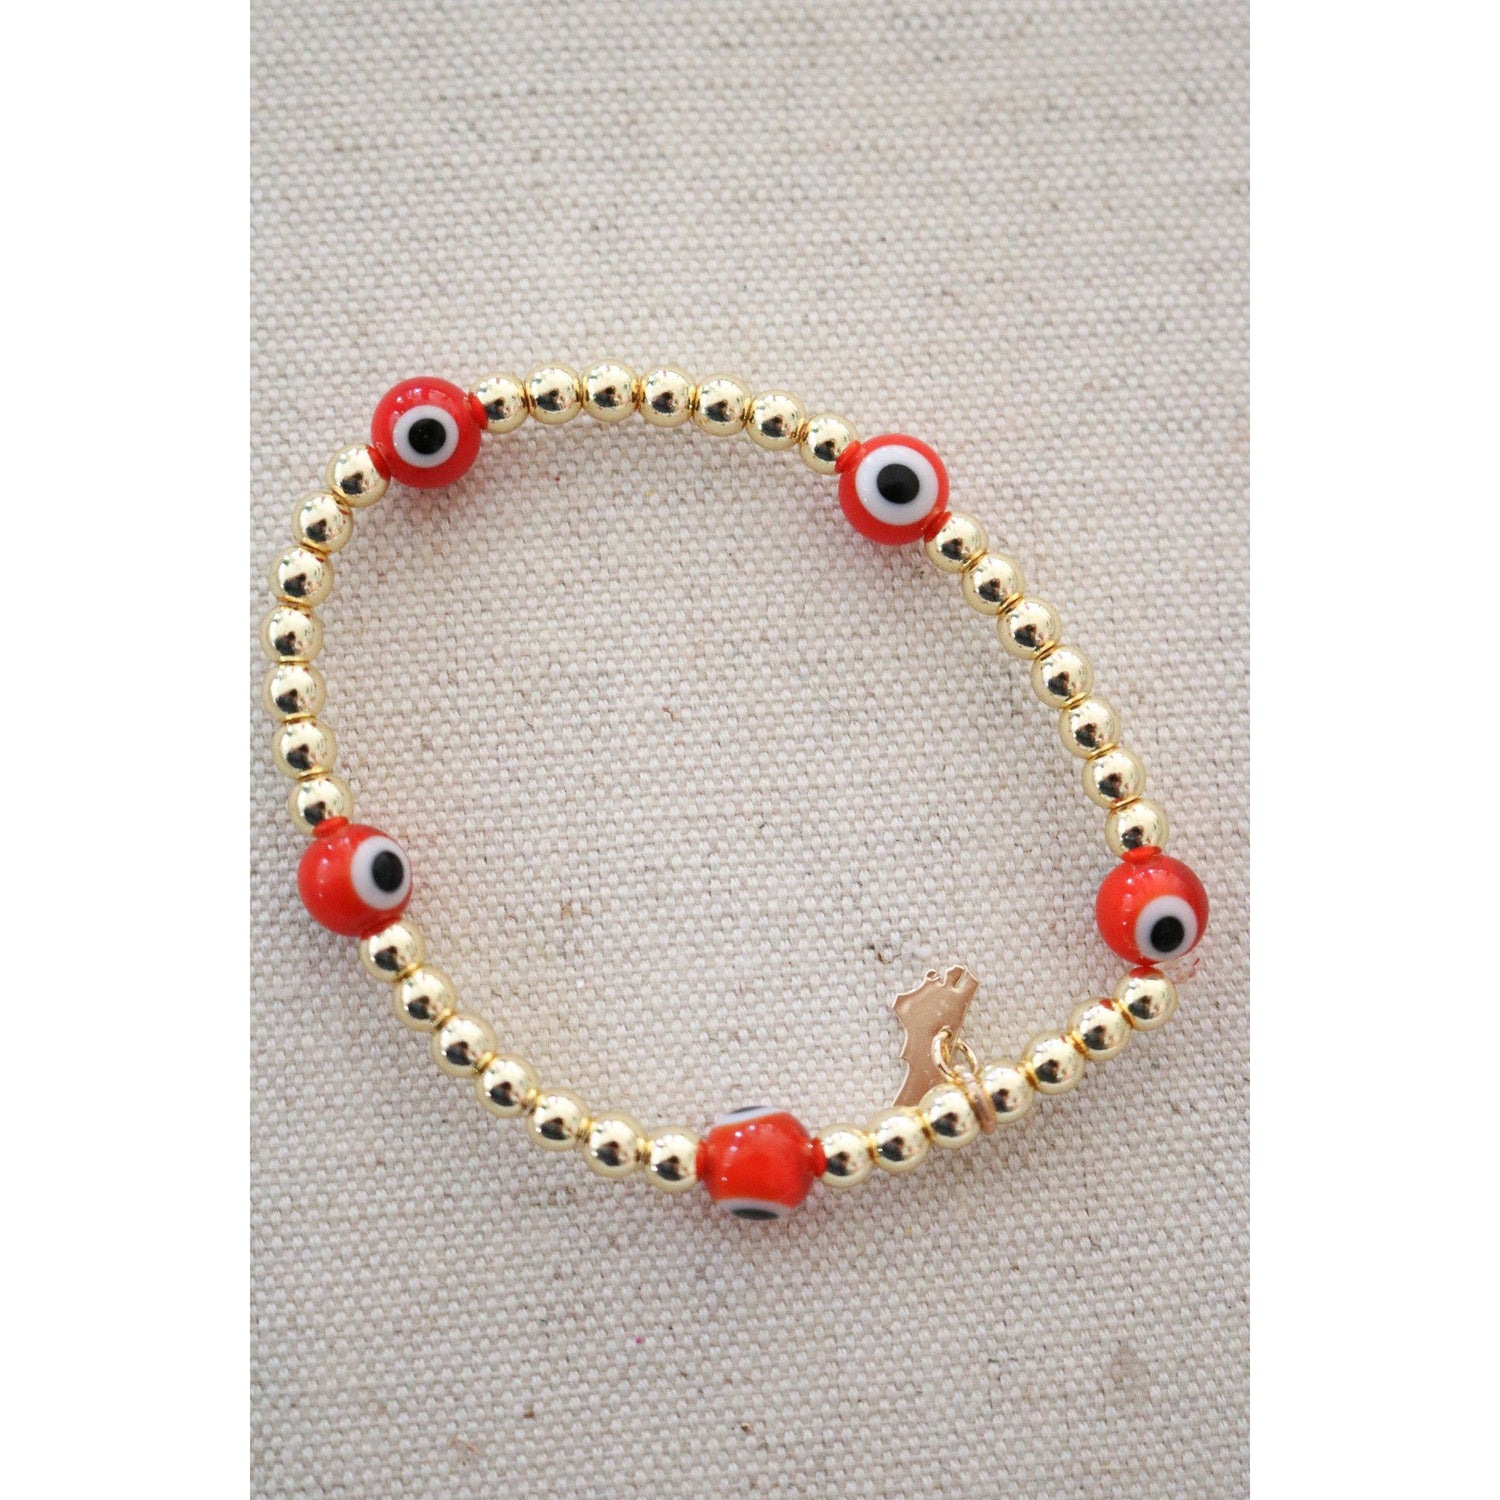 orange and white evil eye beads on a gold hematite stretch bracelet